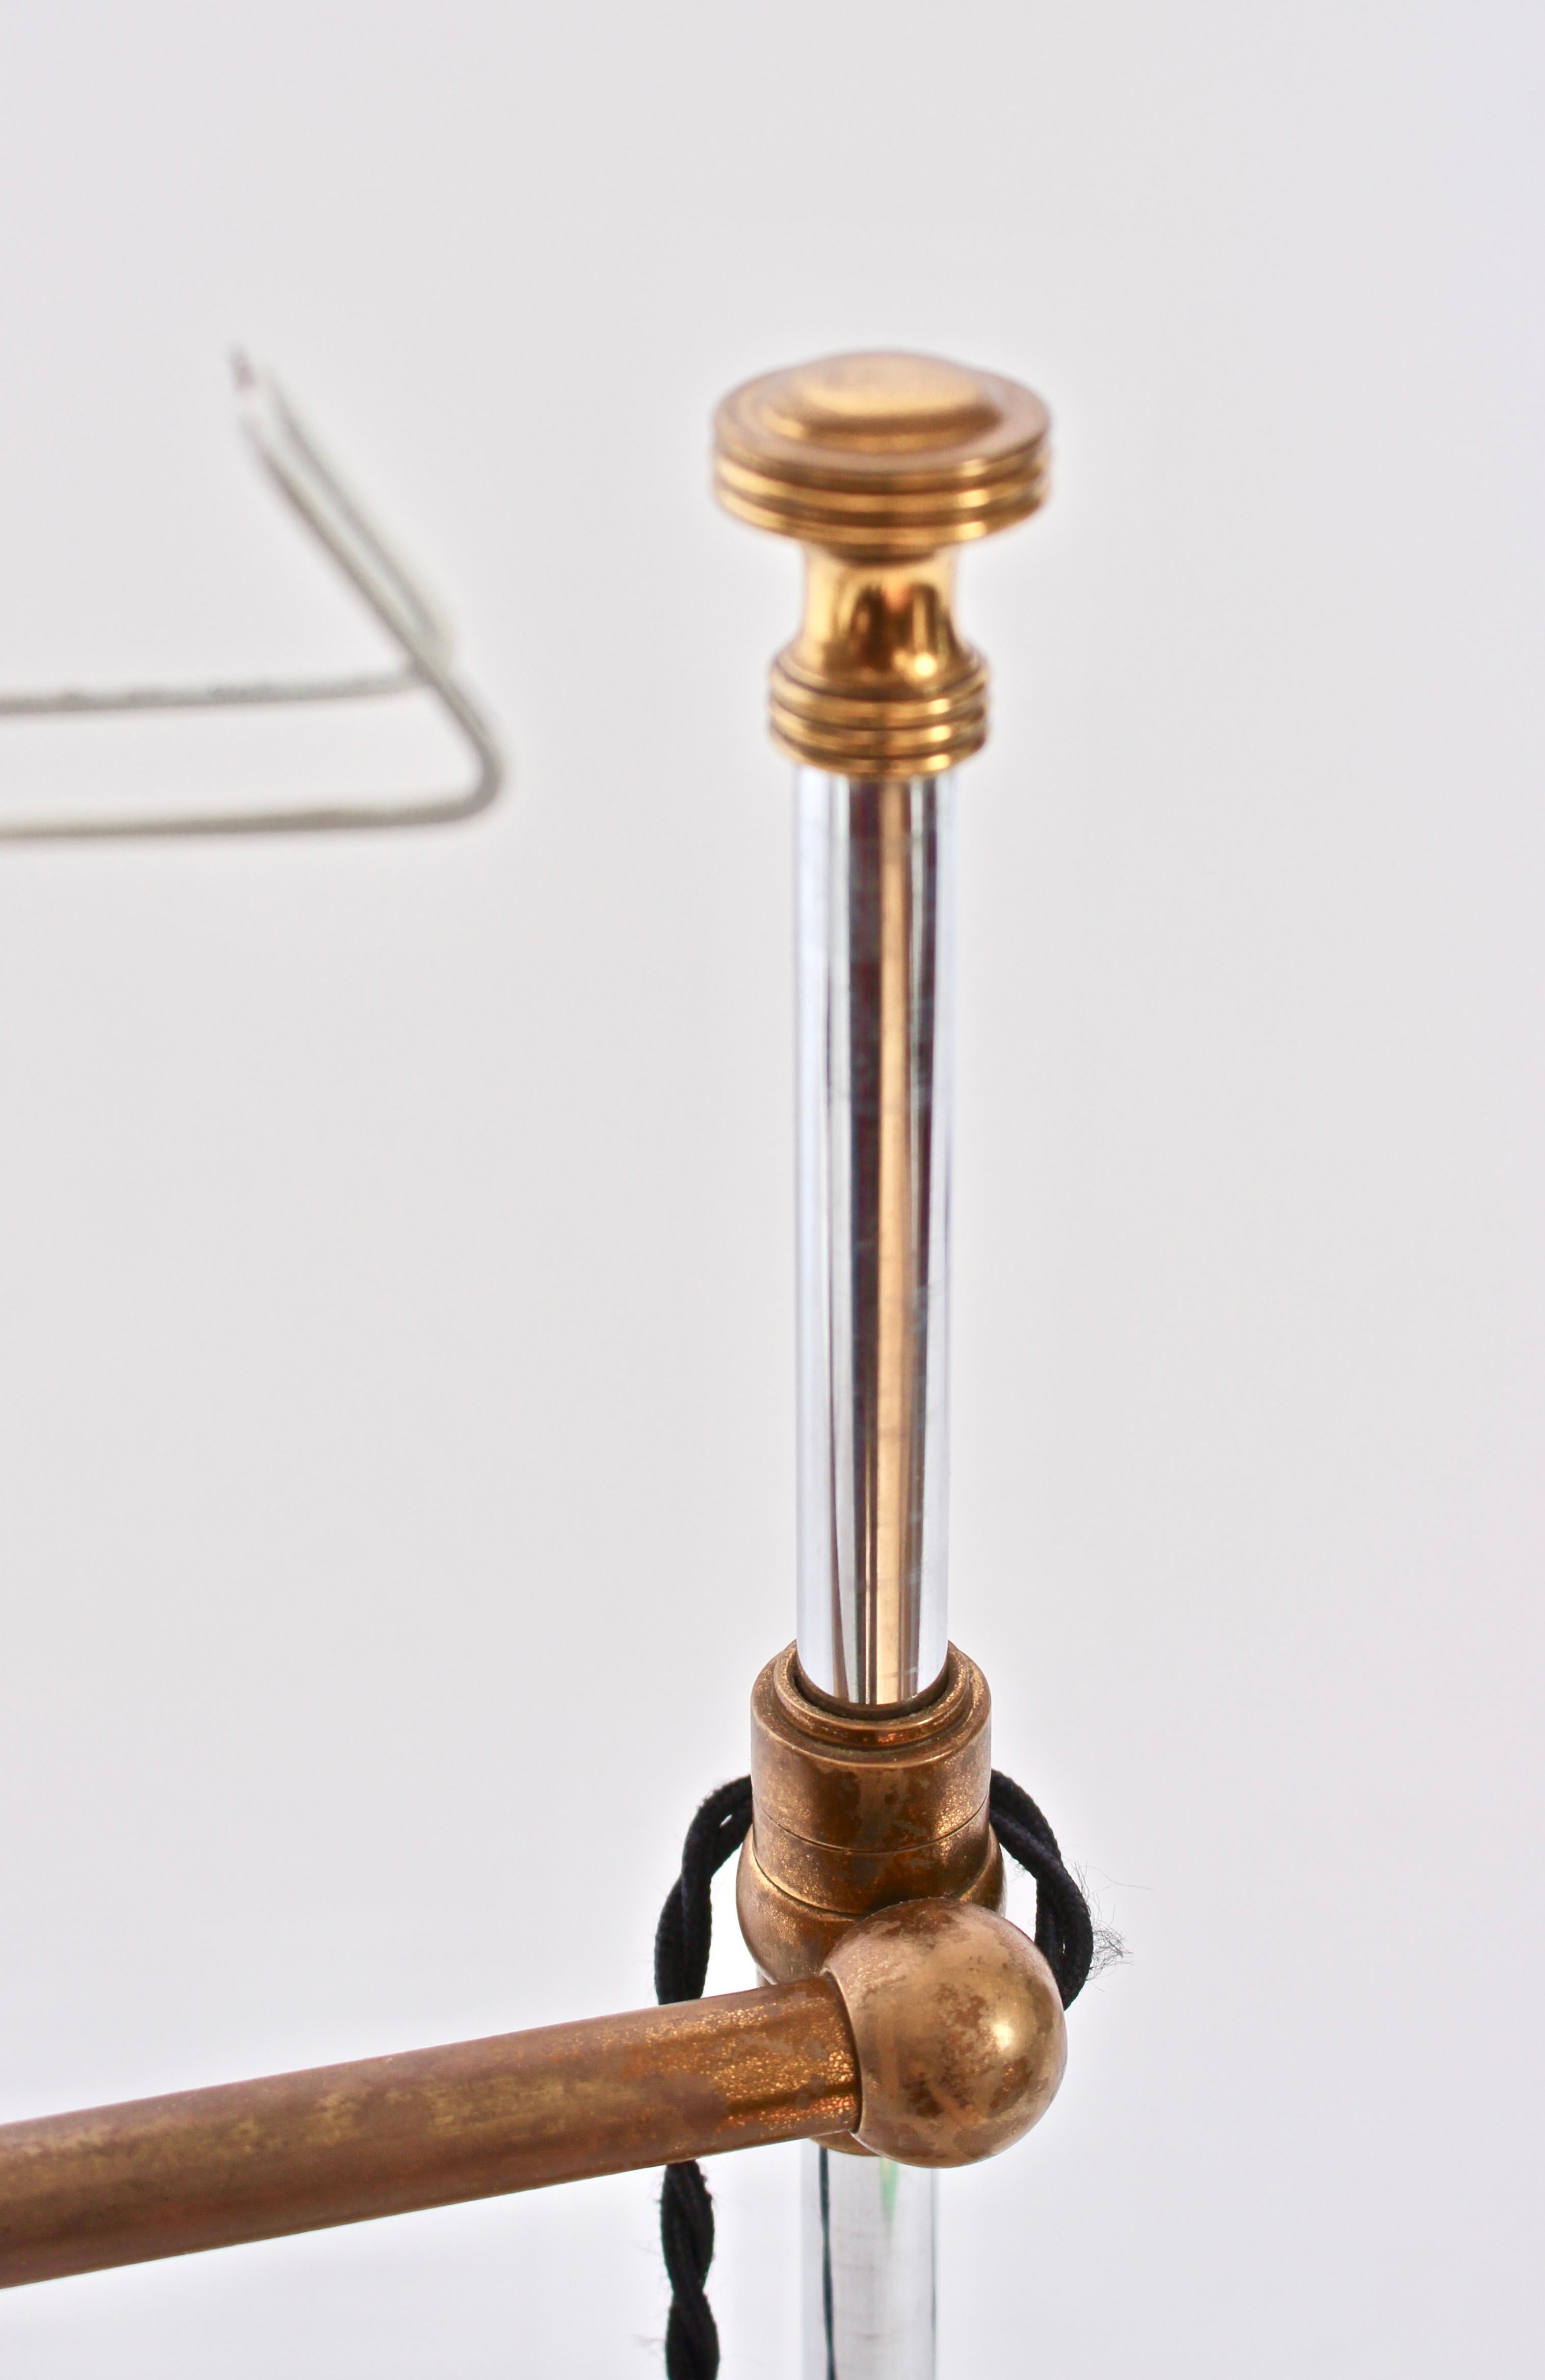 Art Deco Dazor Swing Arm Brass Desk Lamp with White Reflector Shade, 1940s